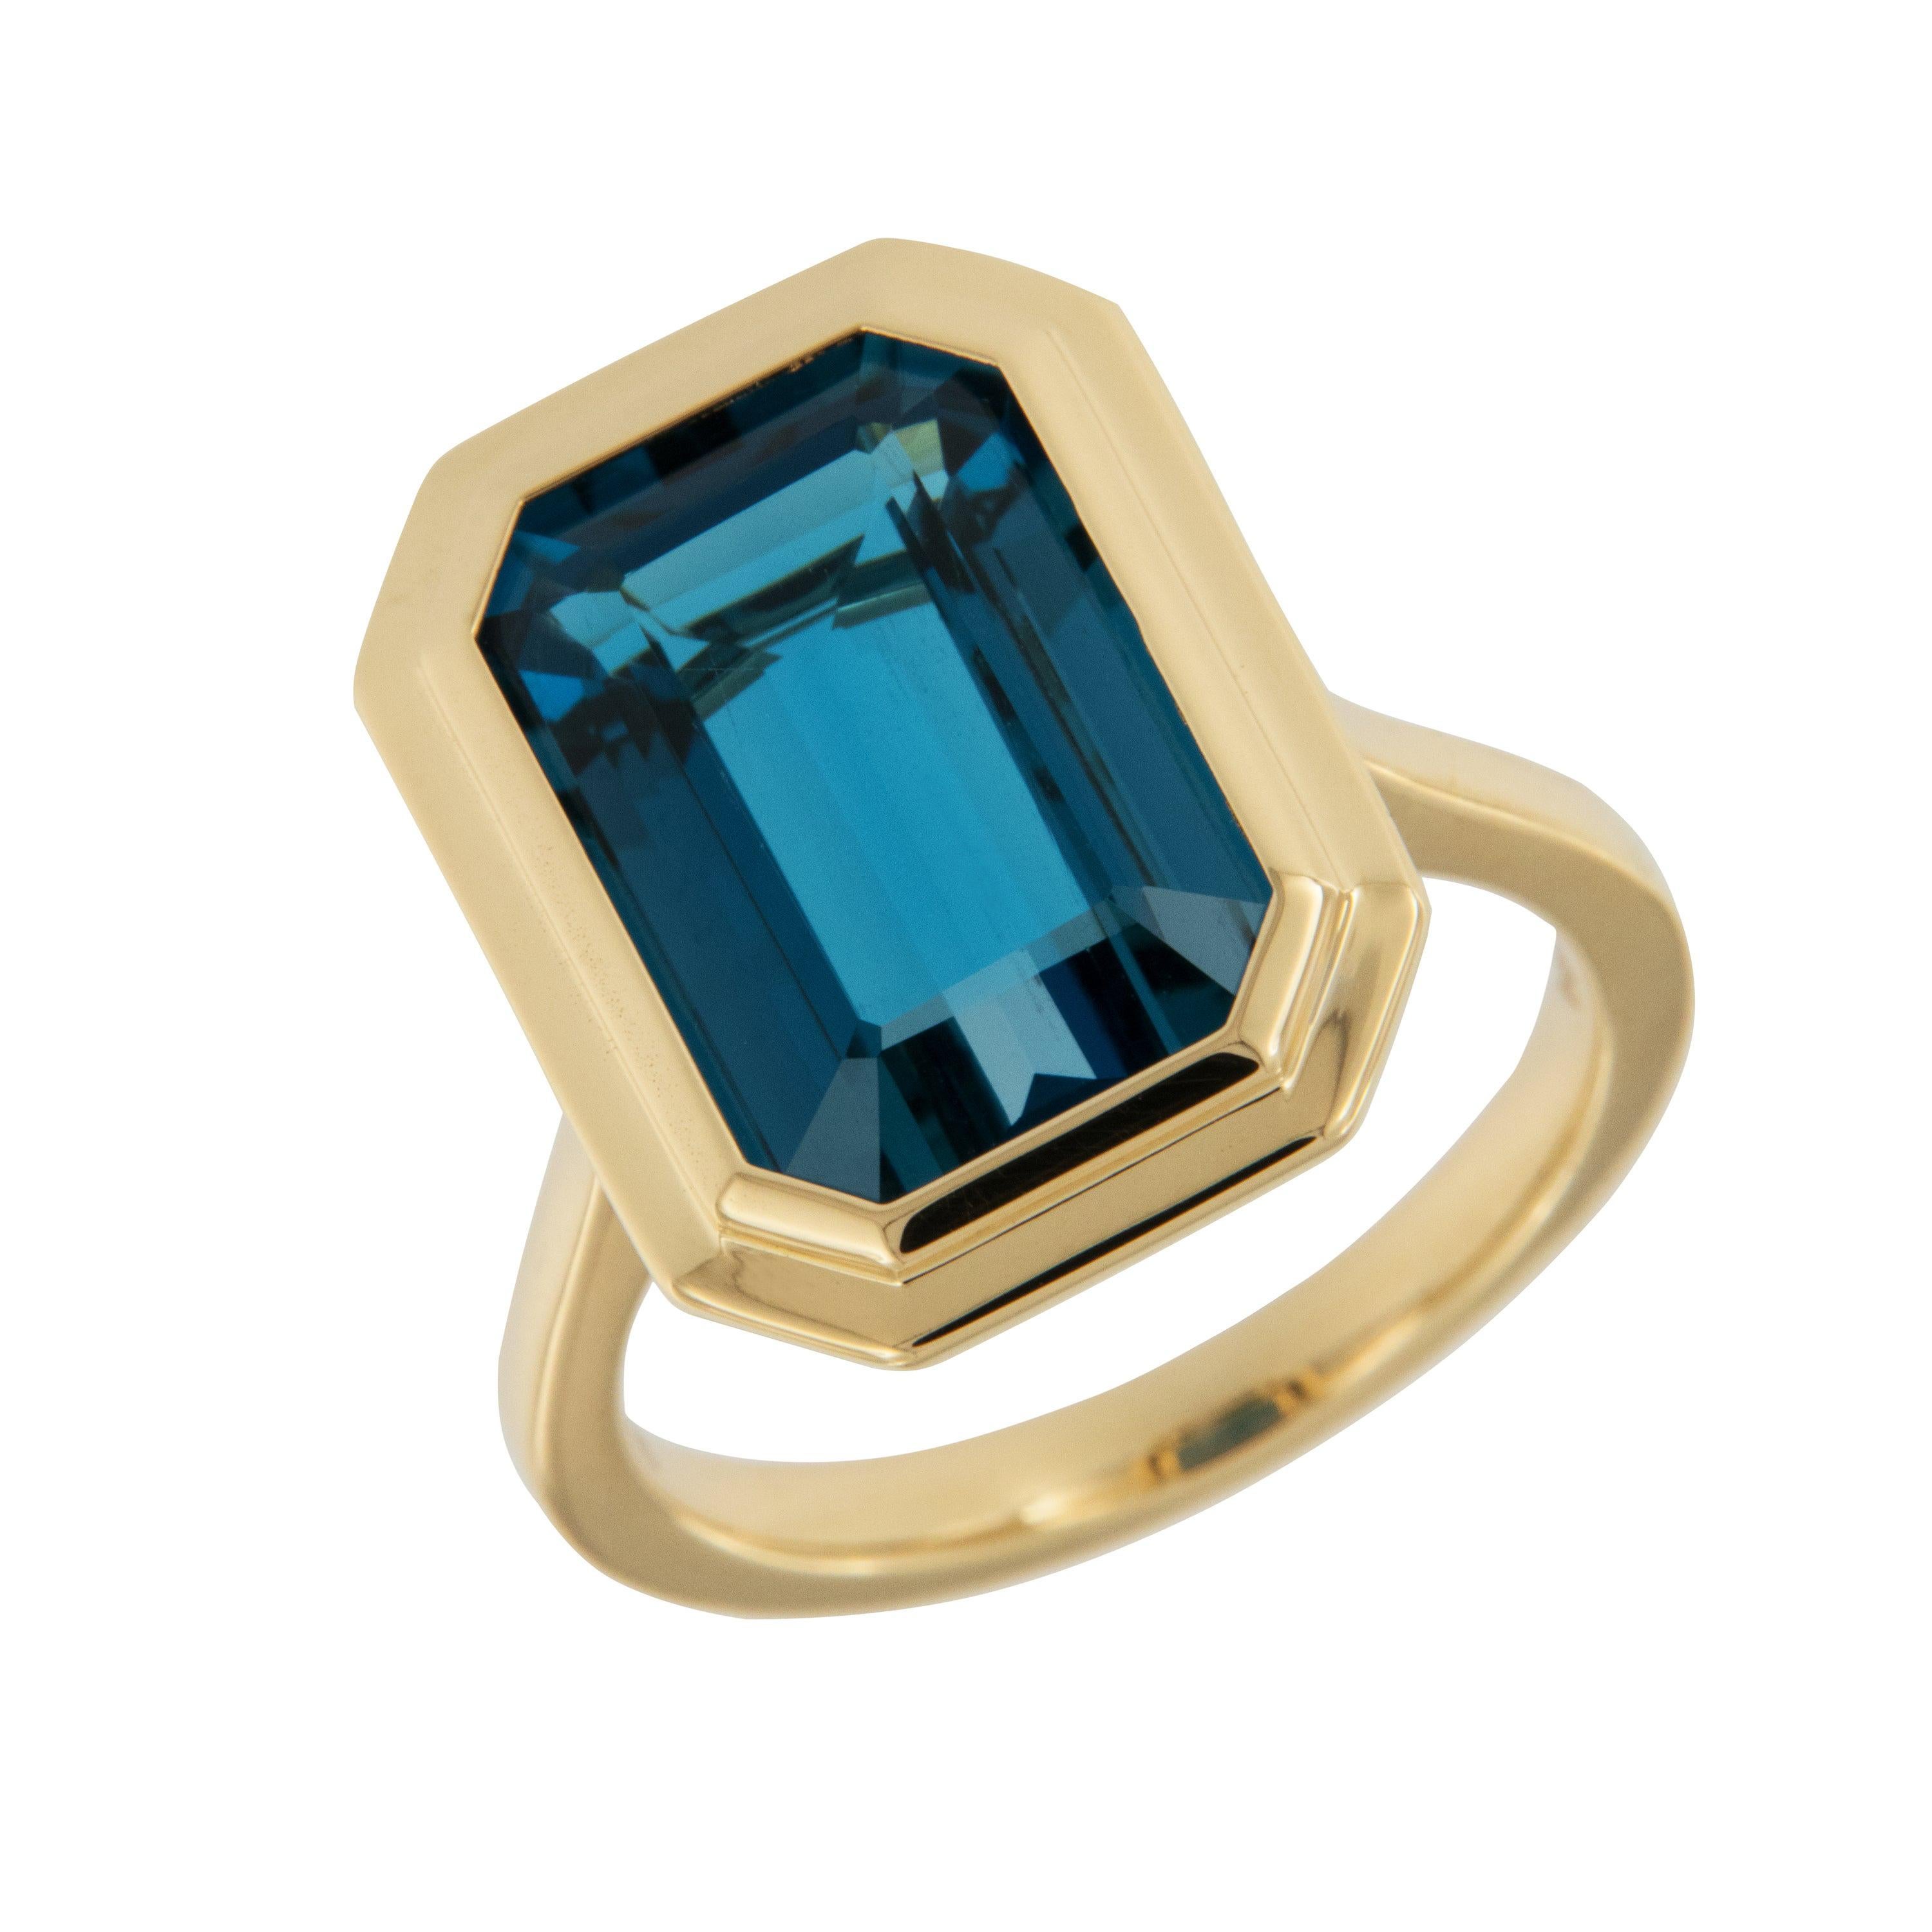 18 Karat Gold "Manhattan Collection" 9.48 Ct. London Blue Topaz Ring by Goshwara For Sale